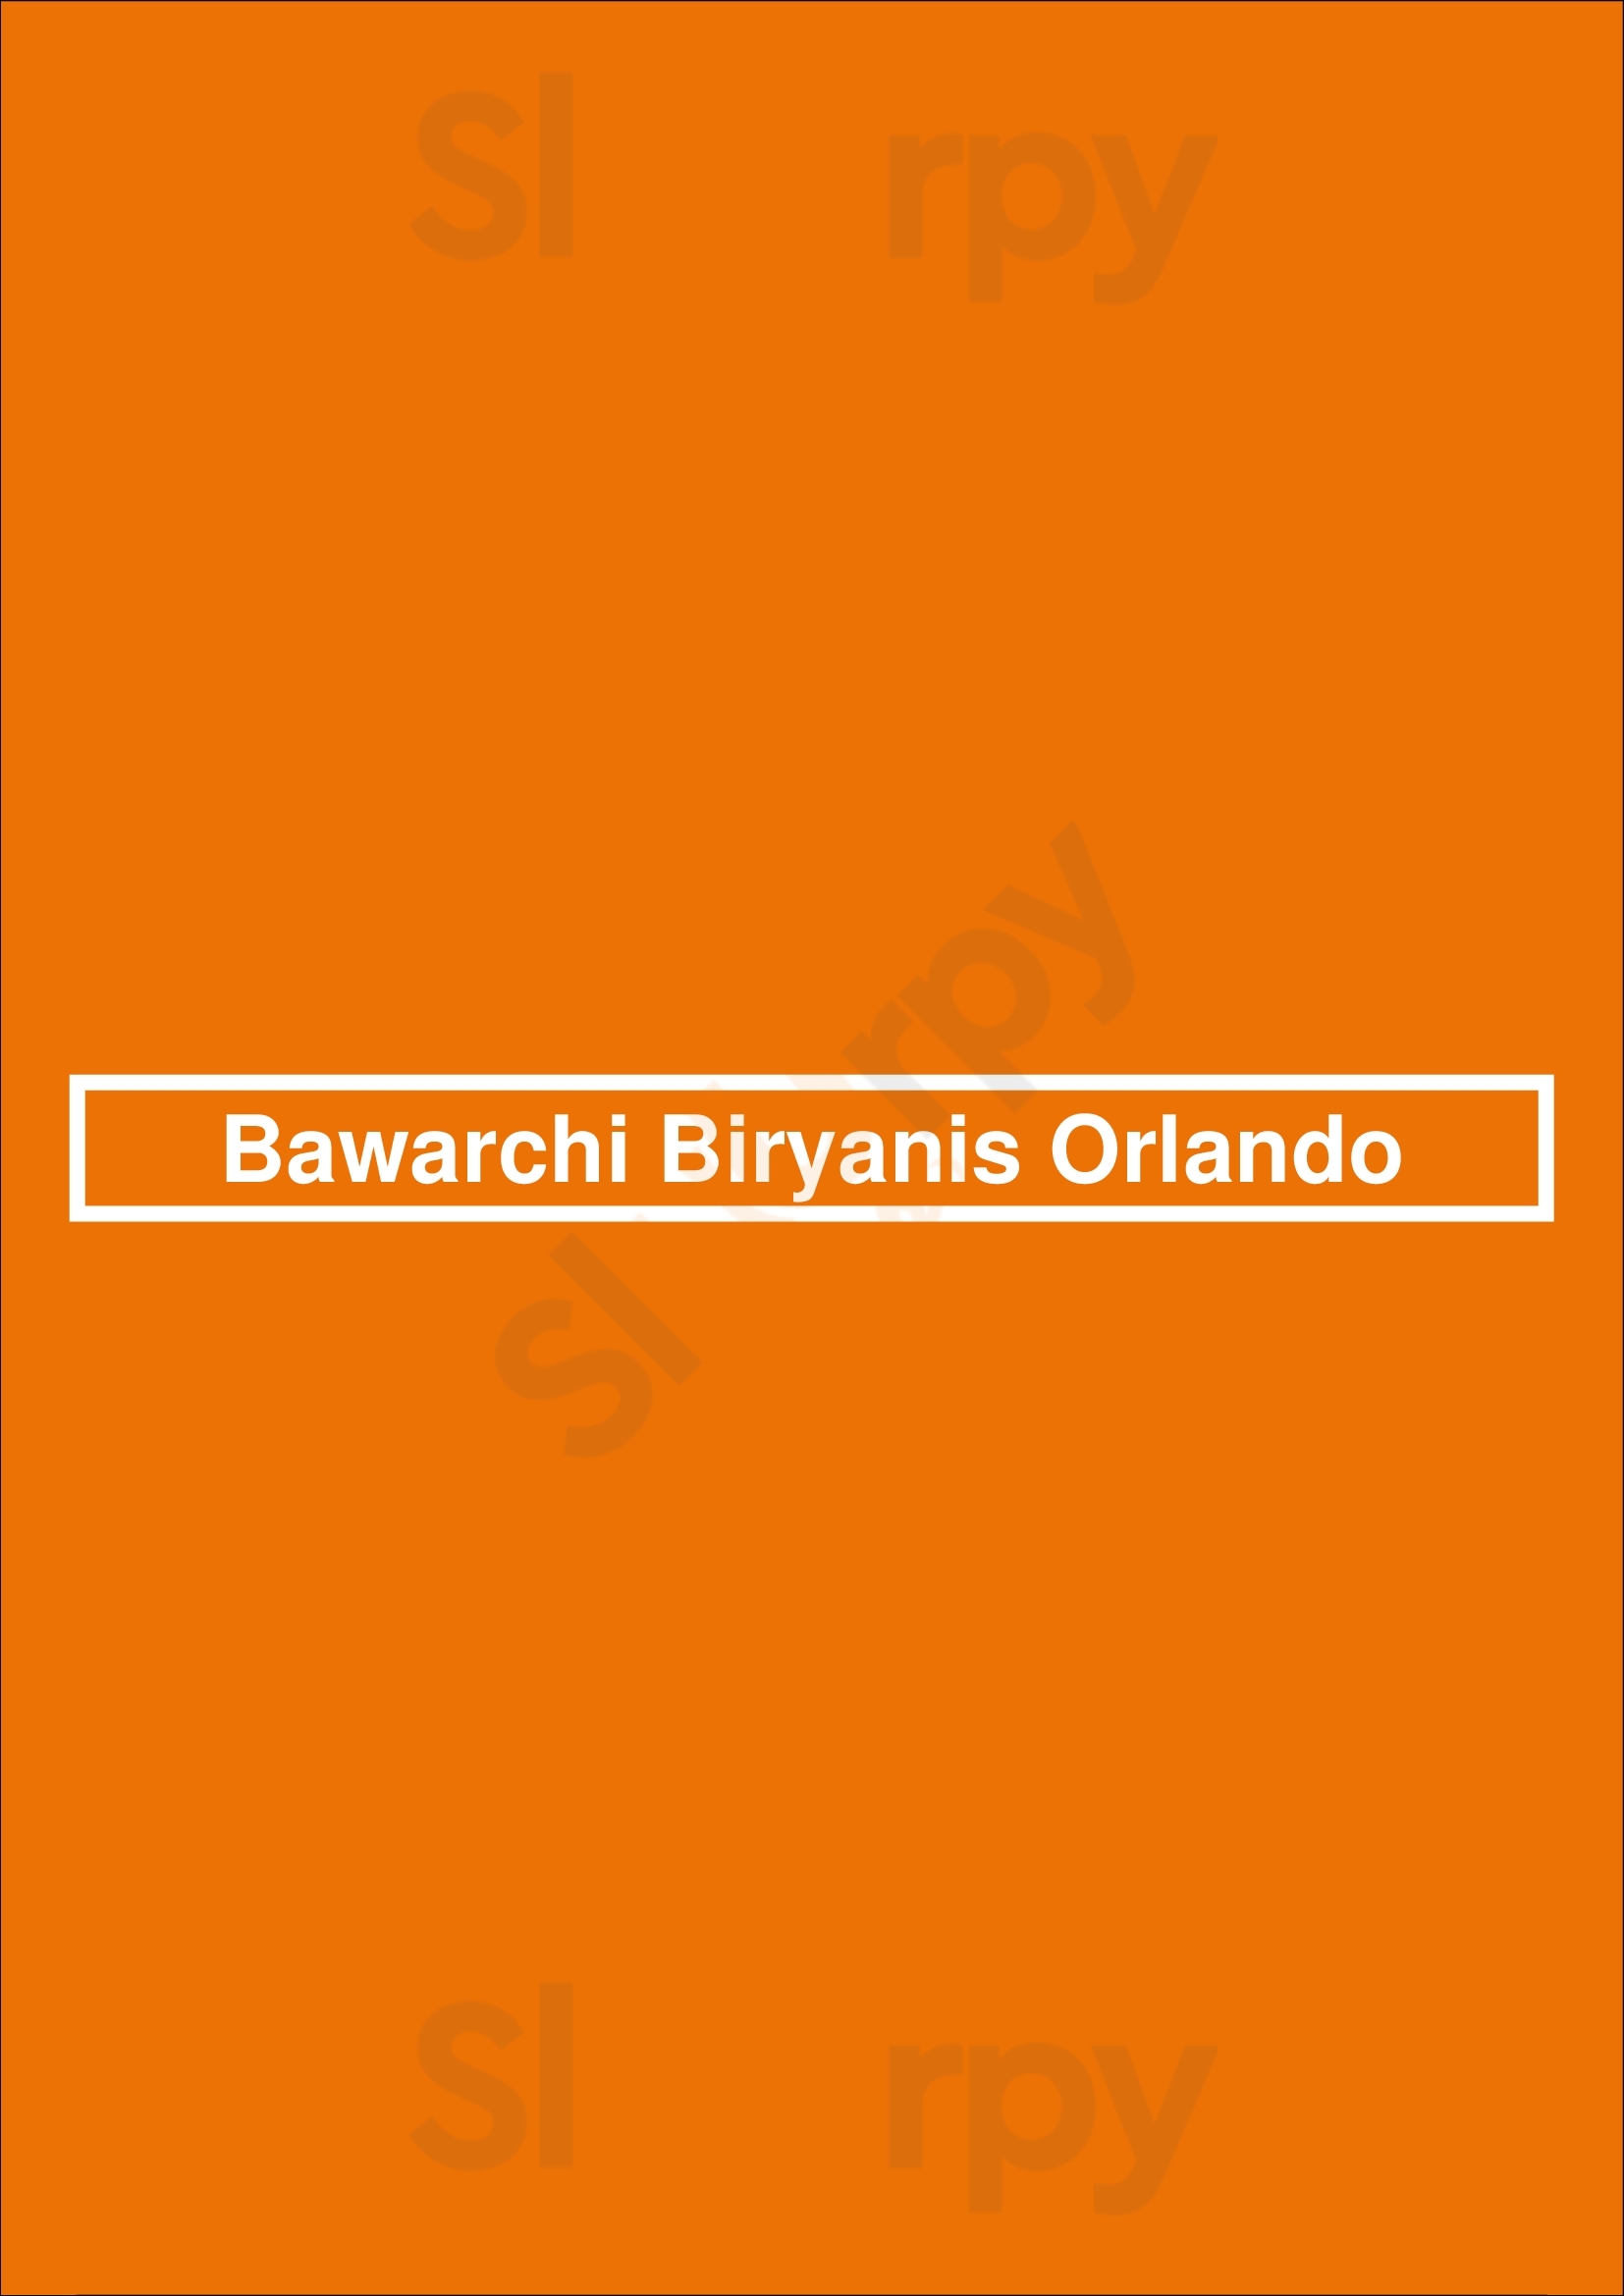 Bawarchi Biryanis Orlando Orlando Menu - 1